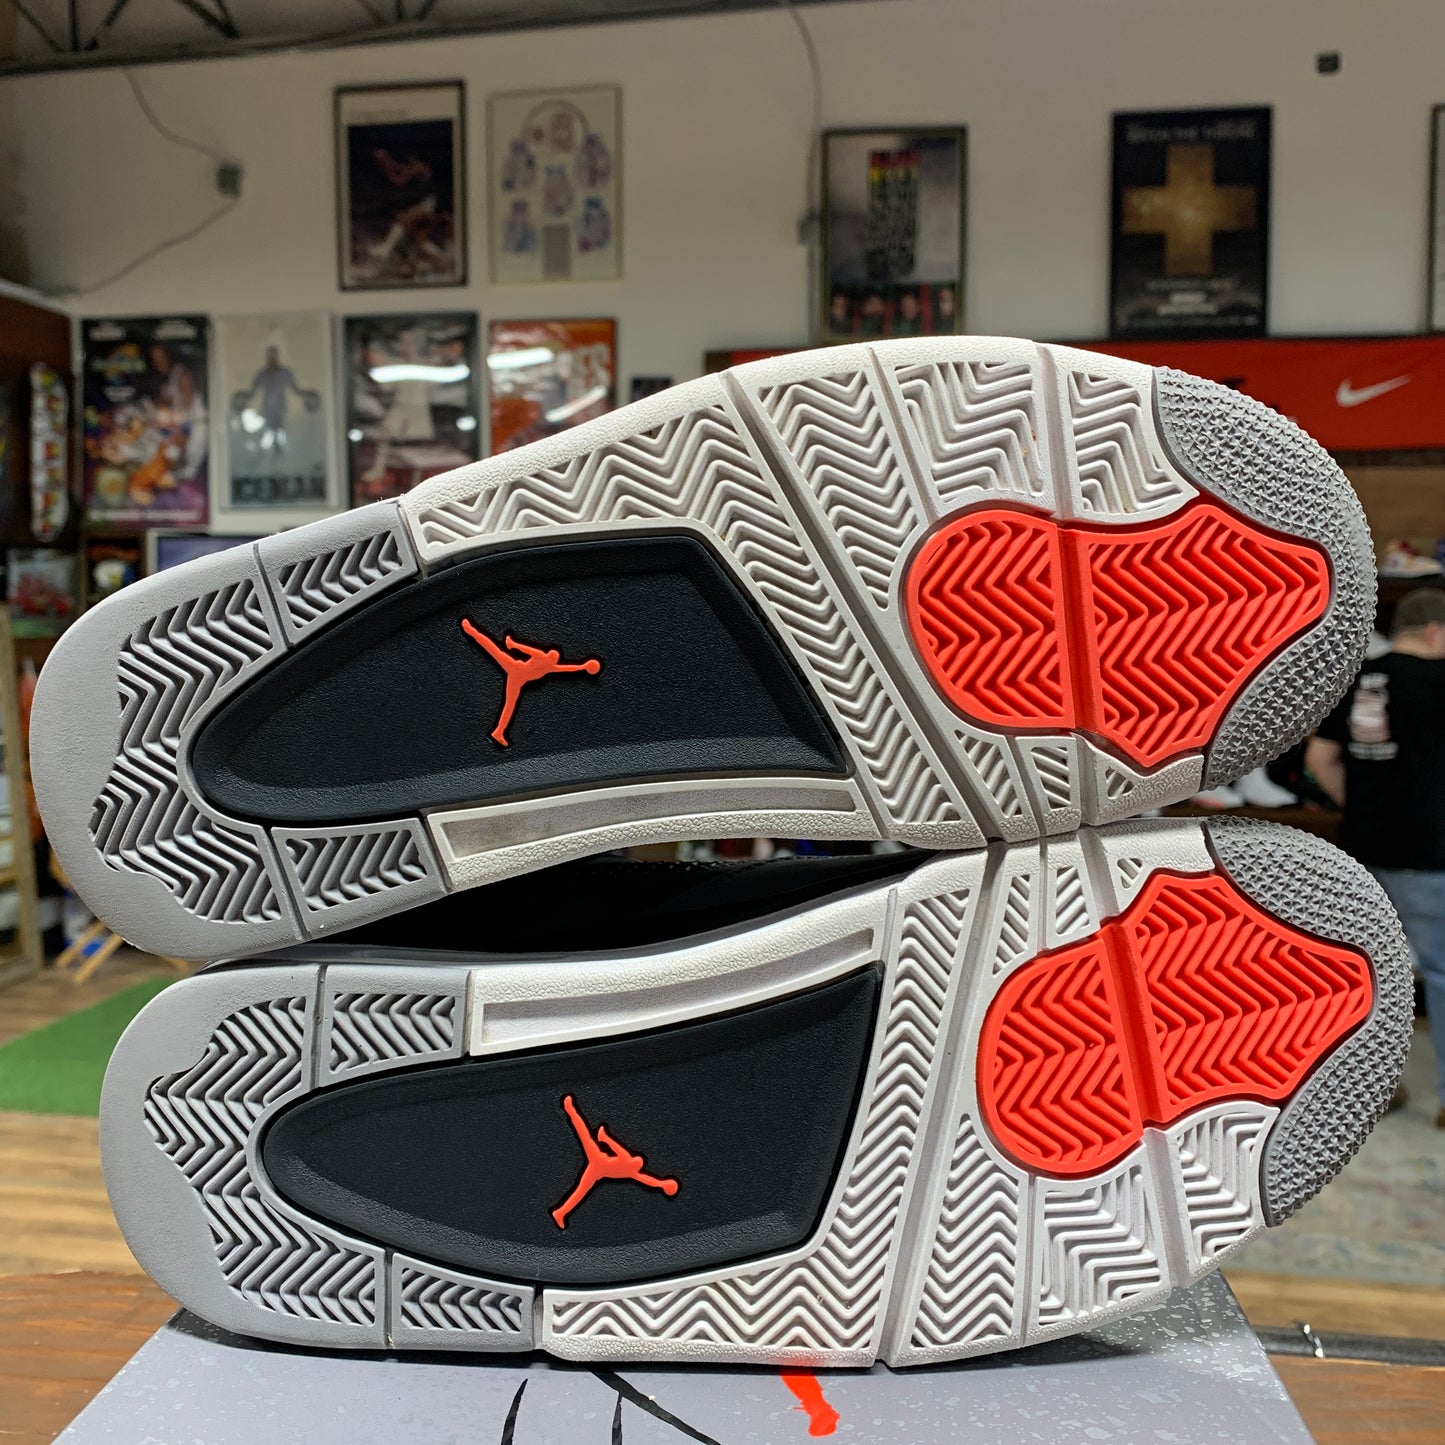 Jordan 4 'Infrared' Size 9